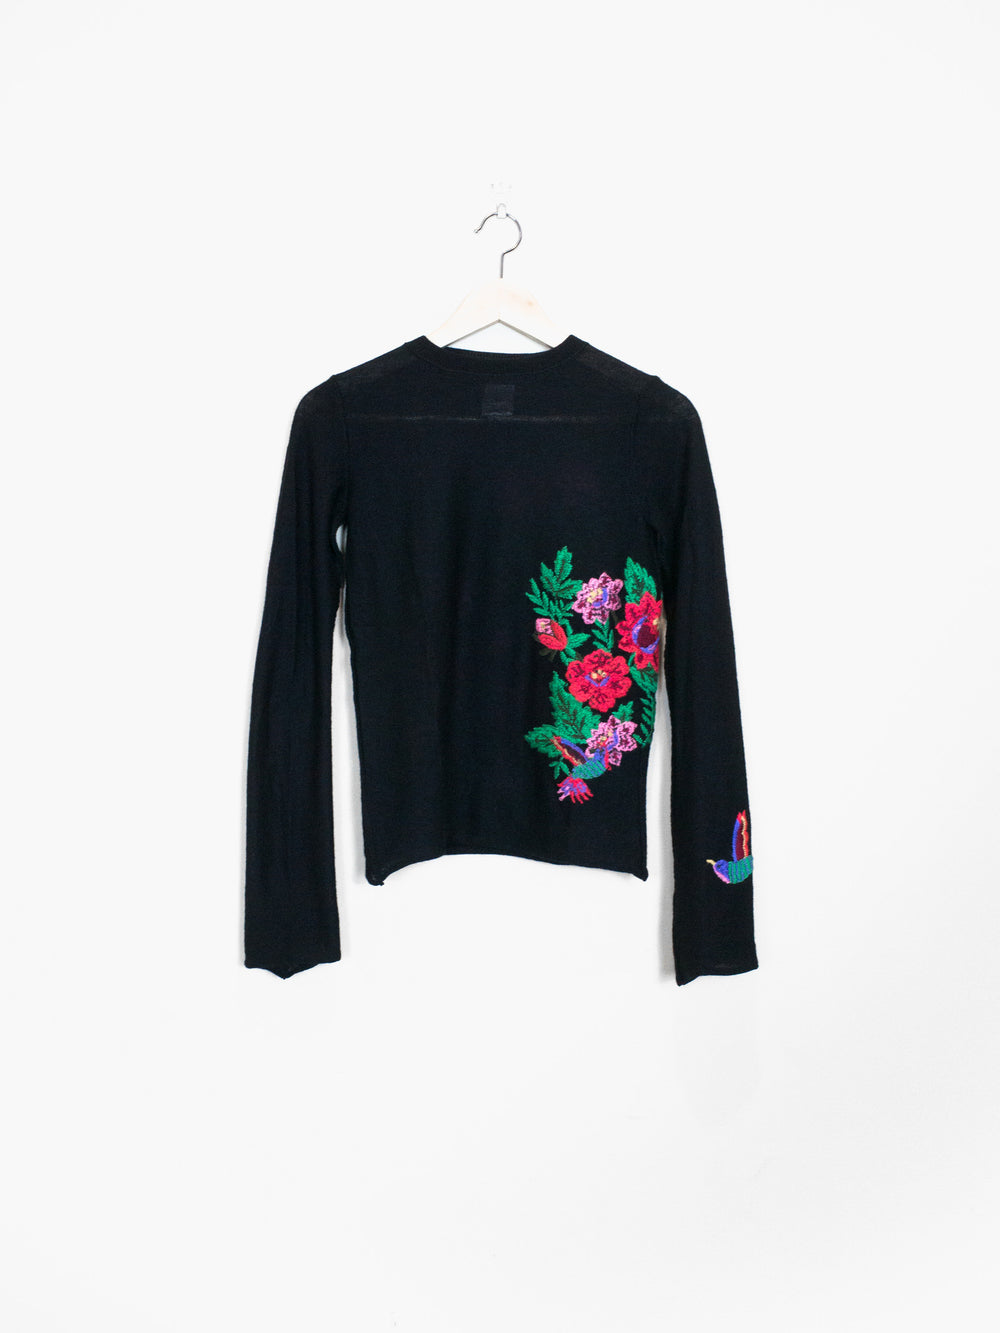 Yohji Yamamoto Y's Floral Appliqué Sweater